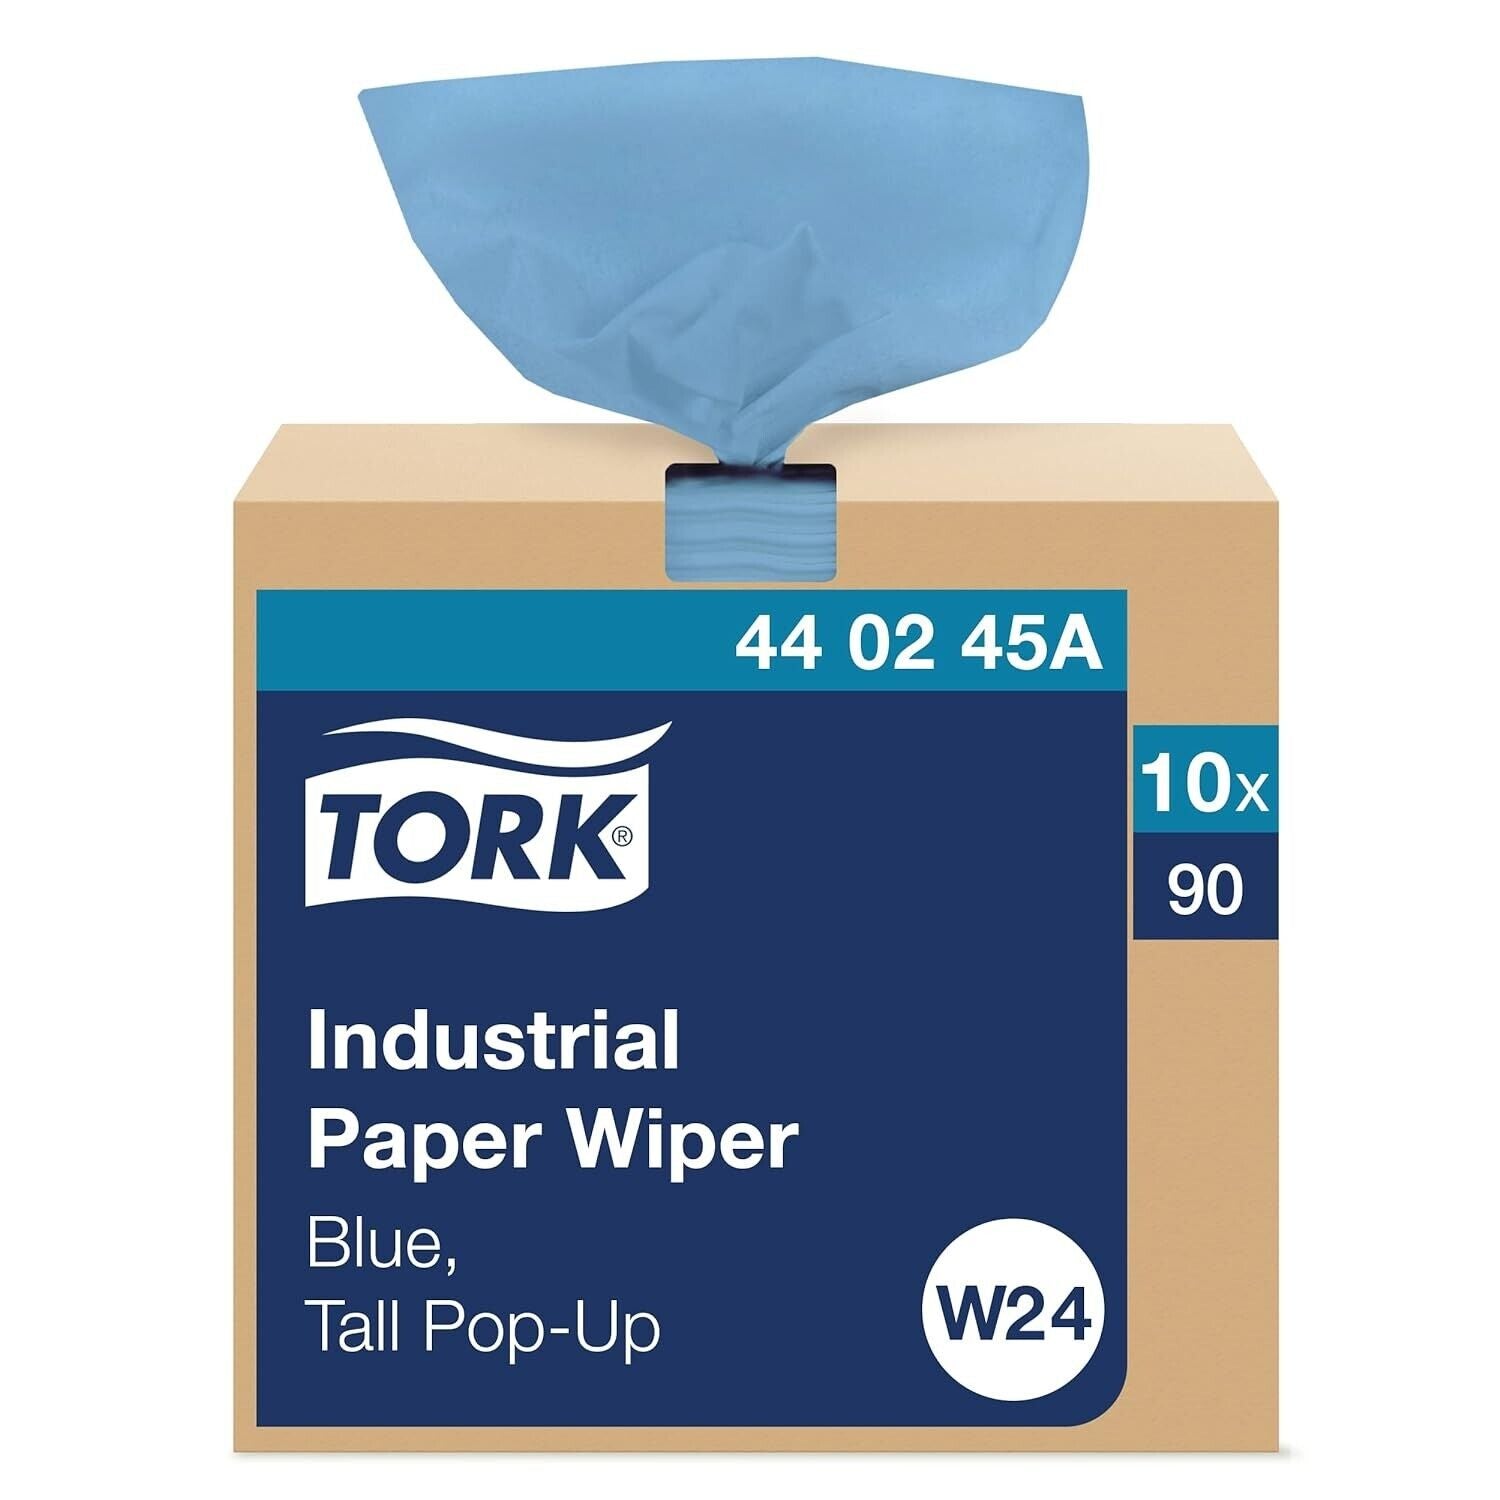 TORK INDUSTRIAL PAPER WIPE PAPER TOWEL 44 02 45A